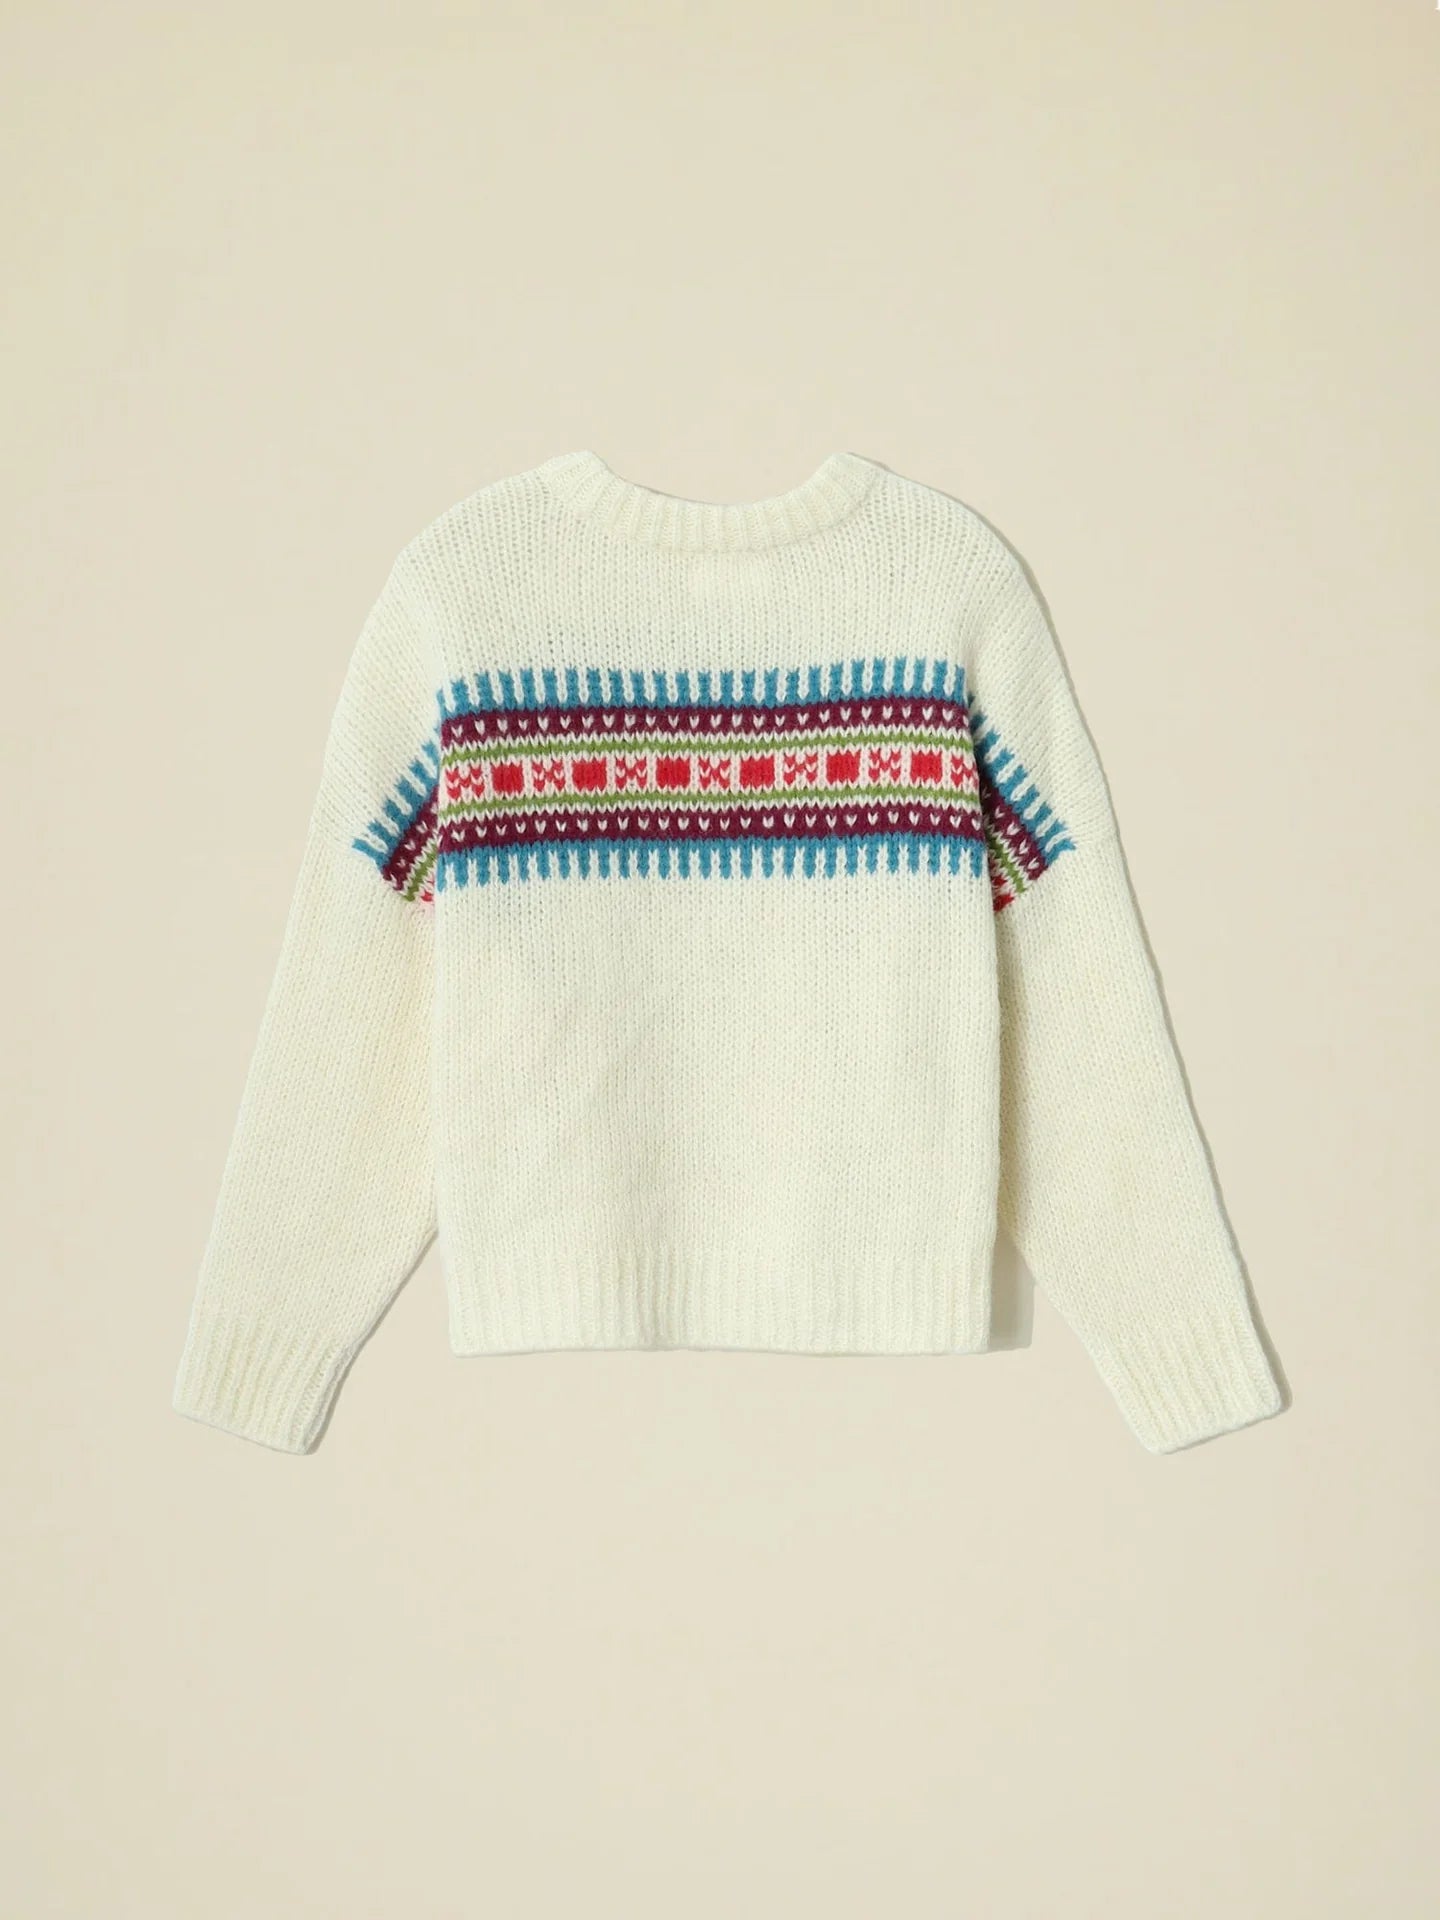 Nolan Sweater in Ivory